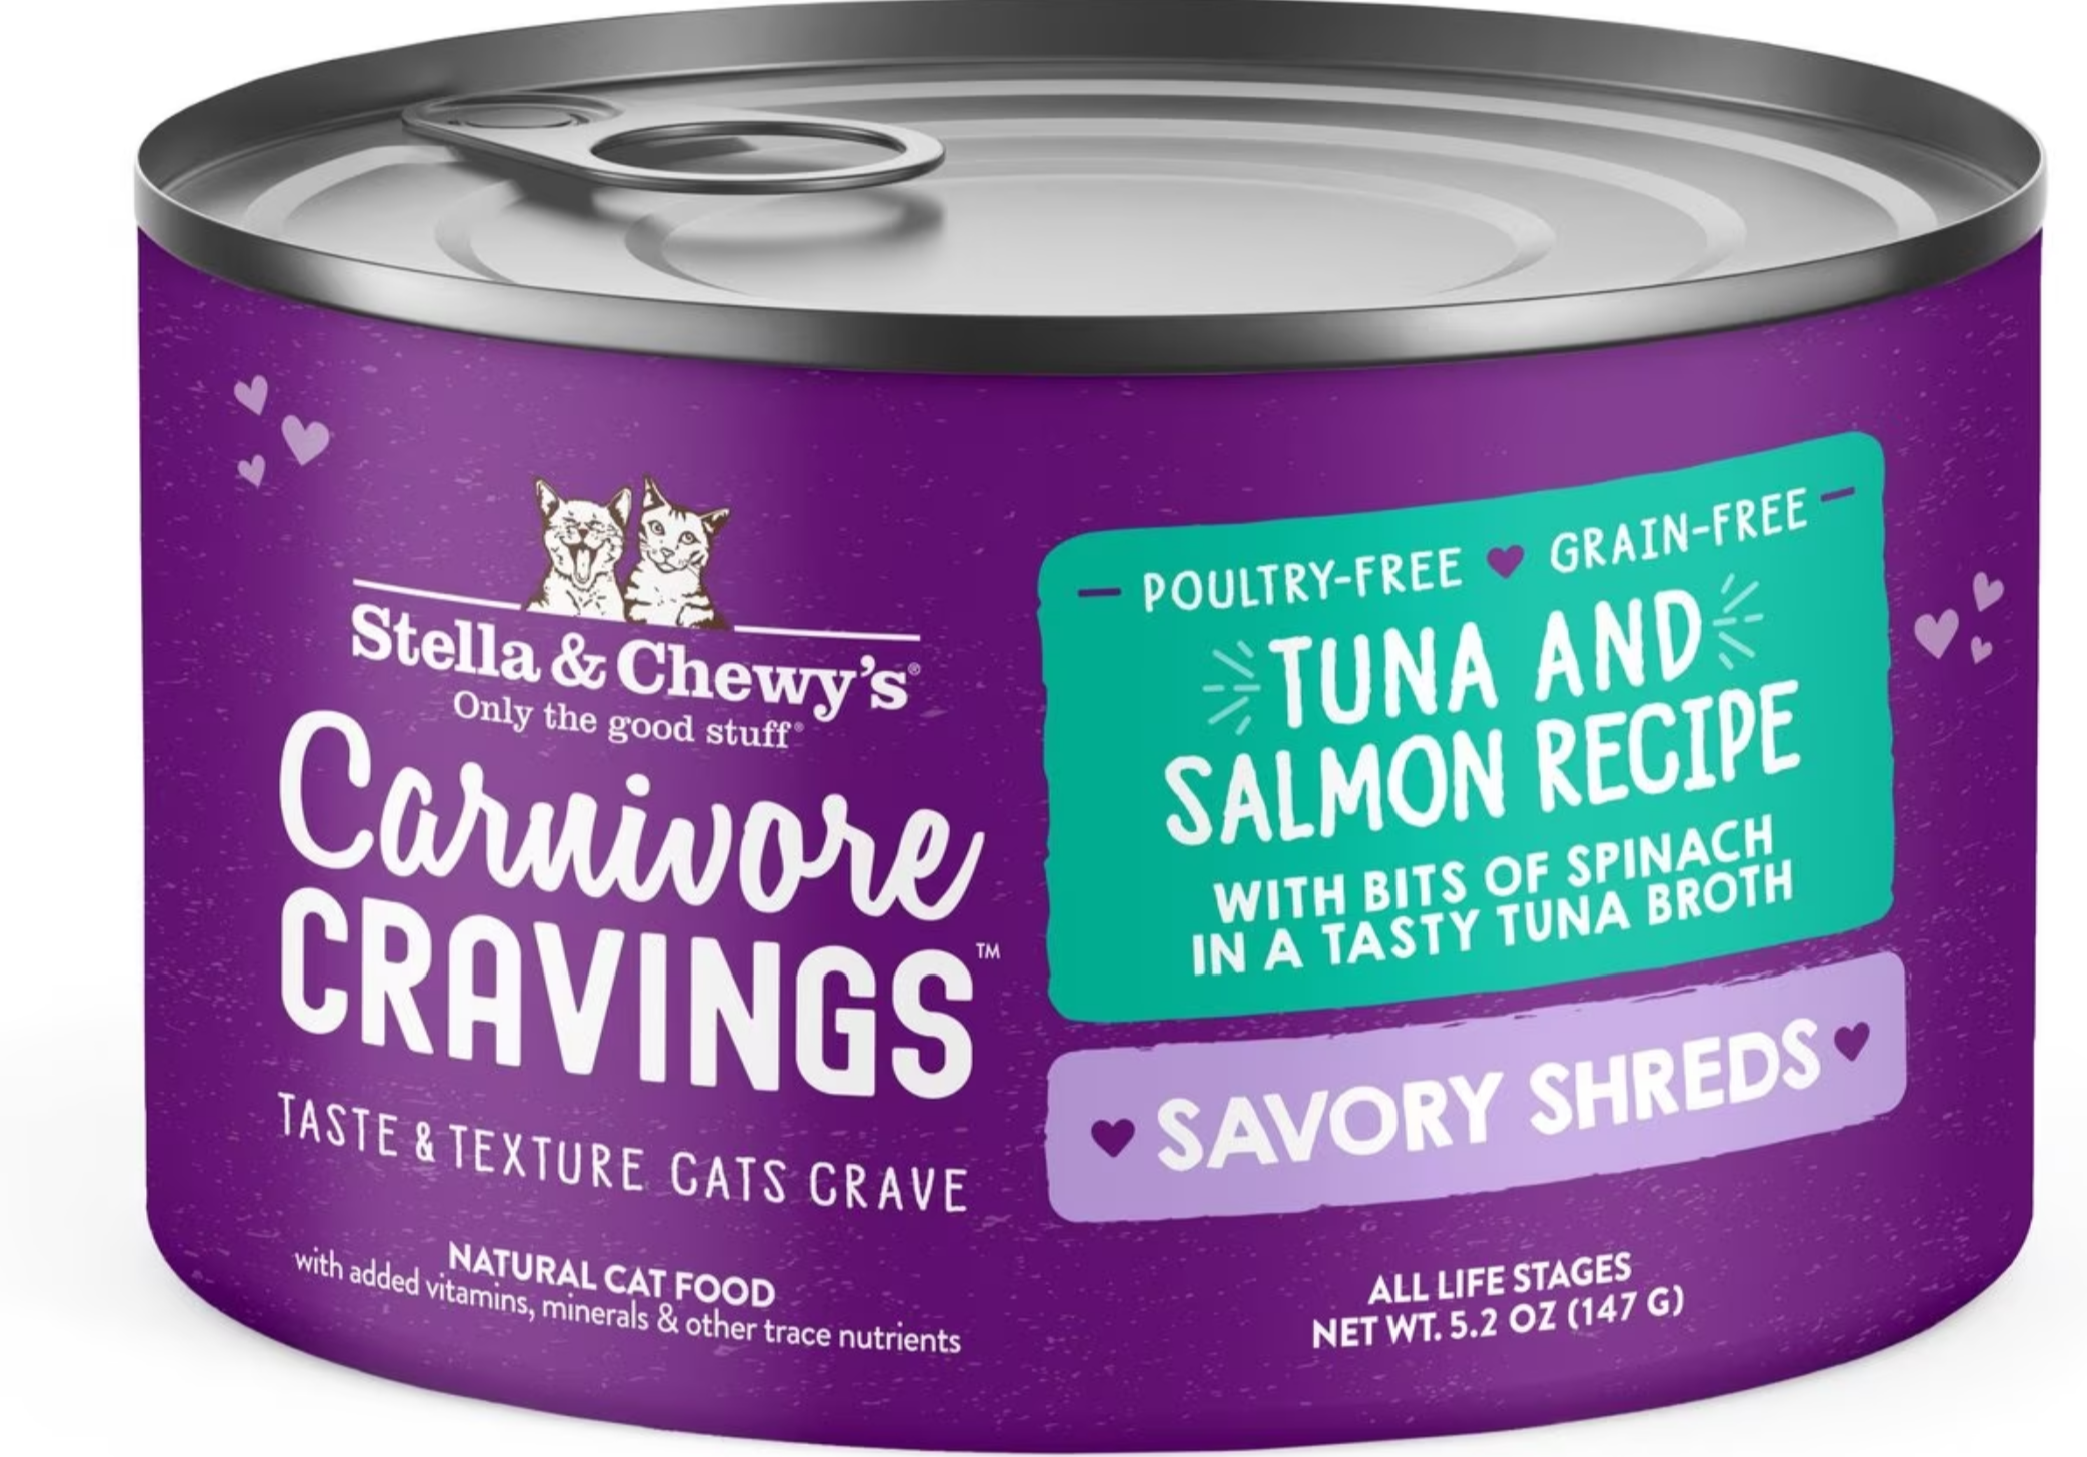 Stella & Chewy's Carnivore Cravings Savory Shreds Tuna & Salmon Recipe - 5.2oz Can